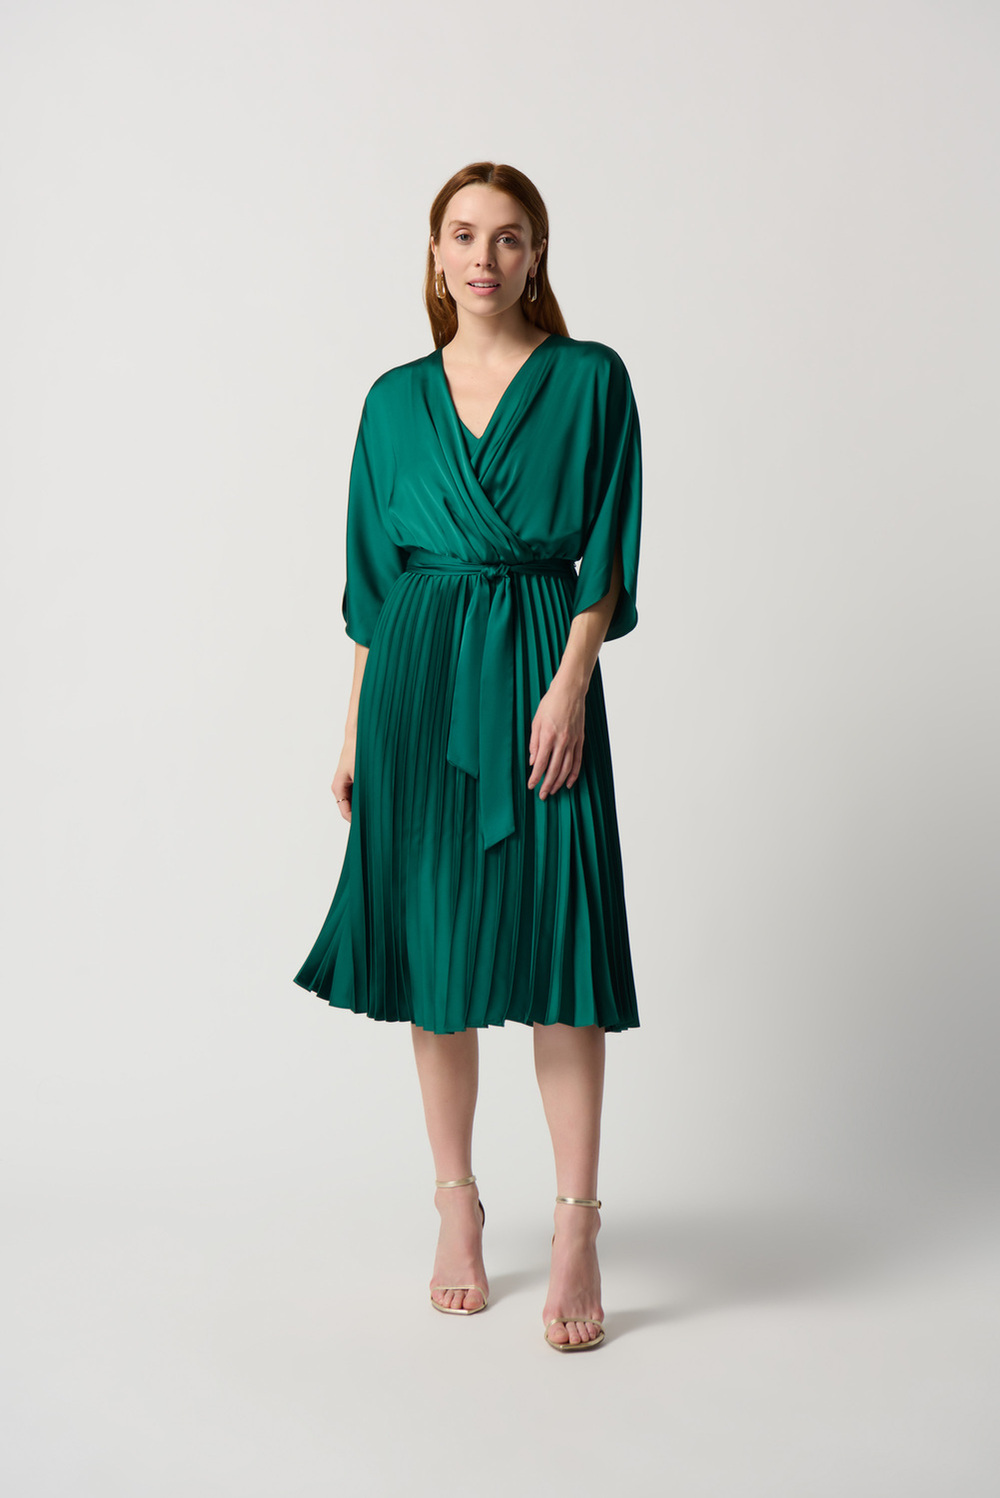 Ruffled wrap dress Style 234265. True Emerald